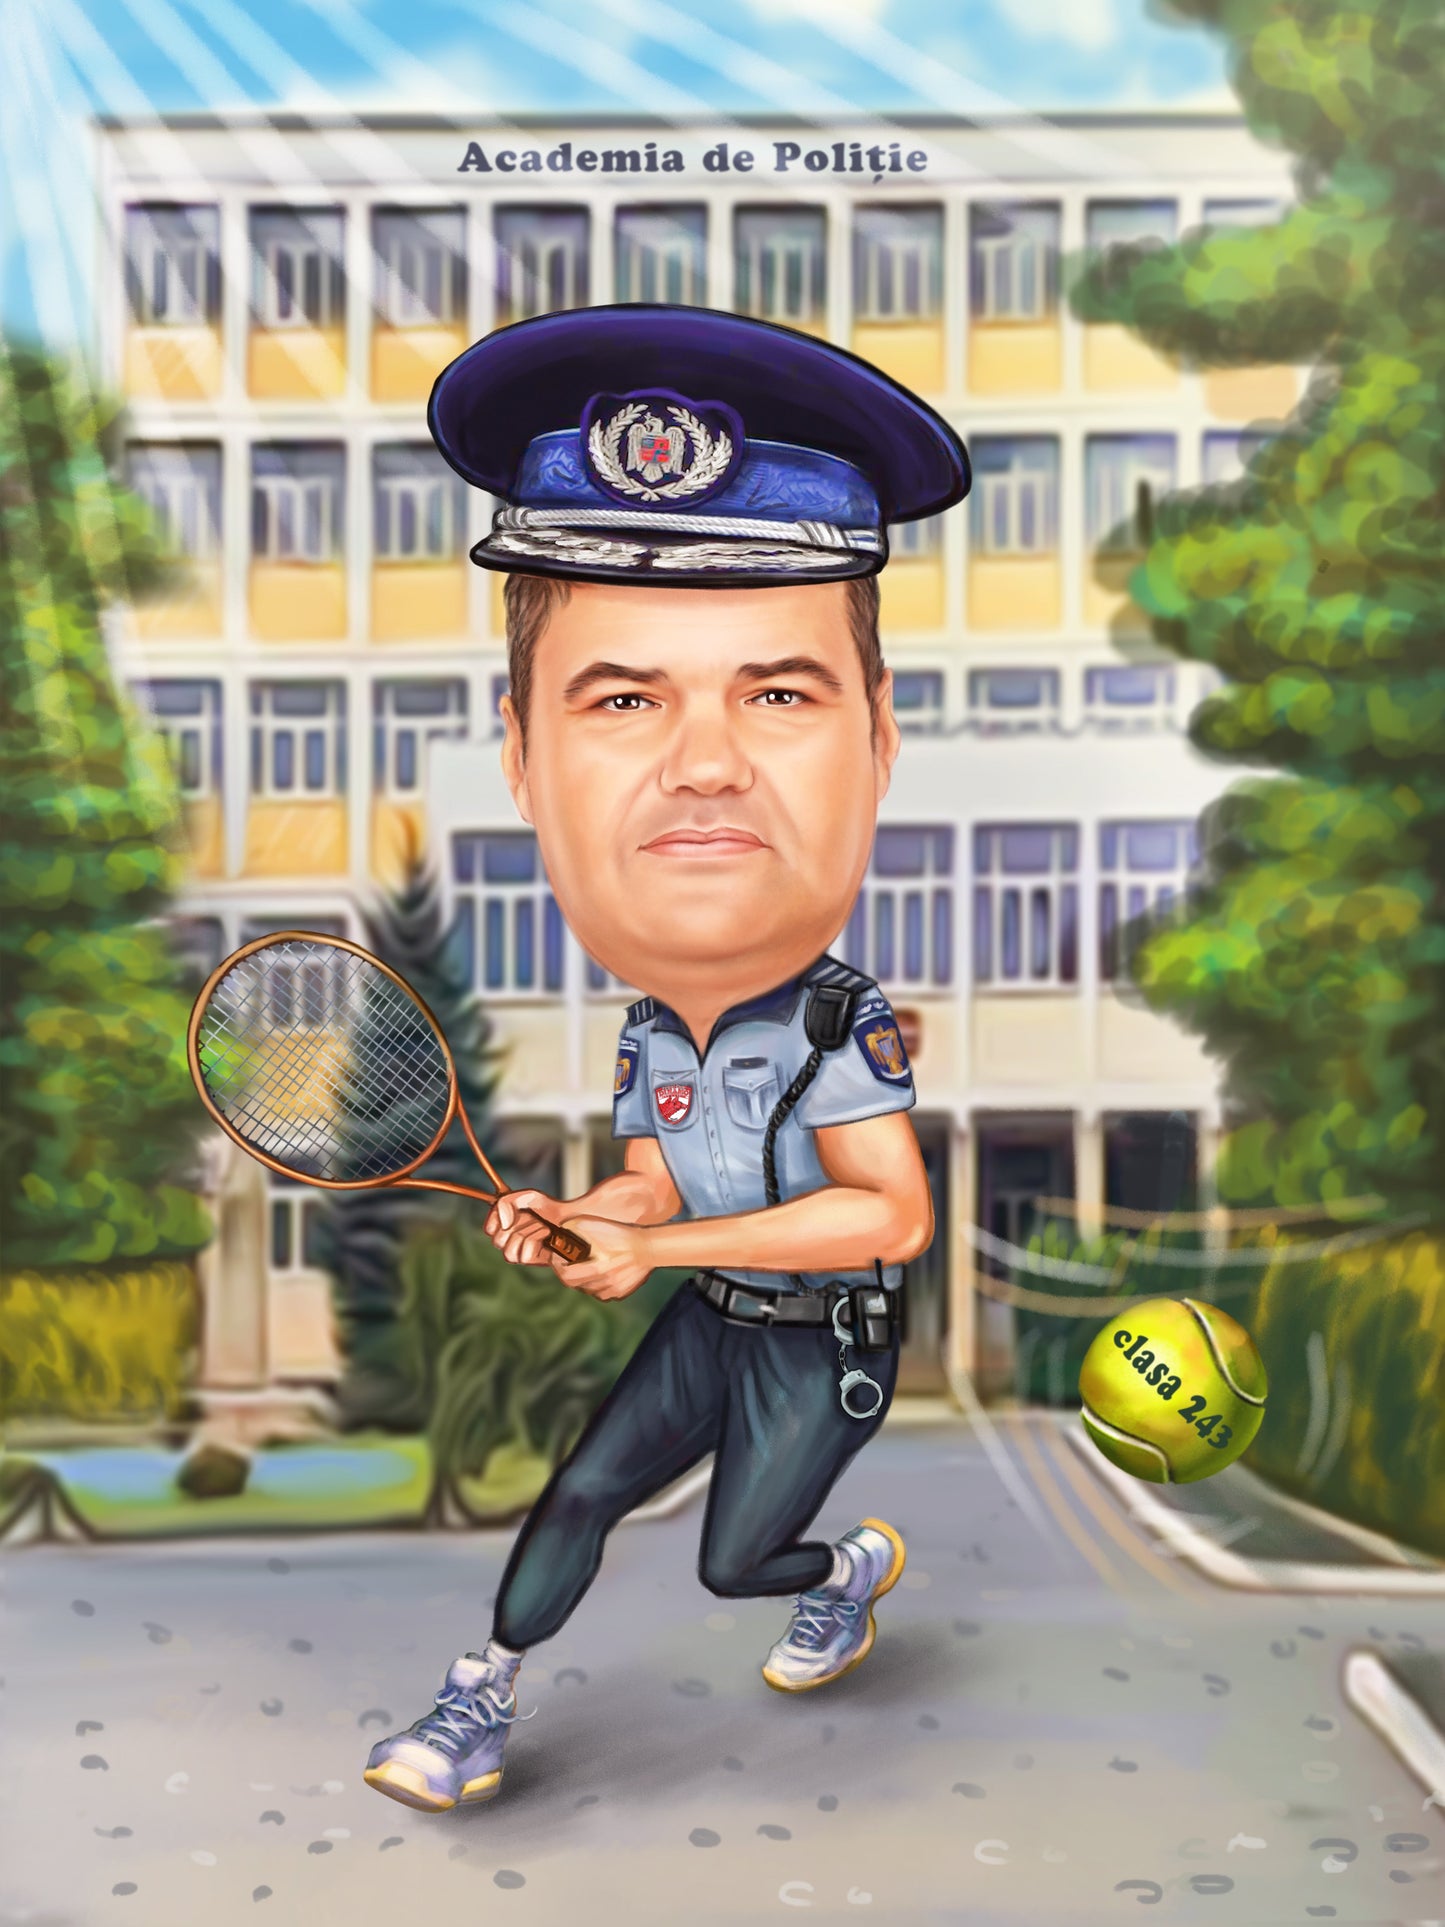 Policeman playing tennis caricature